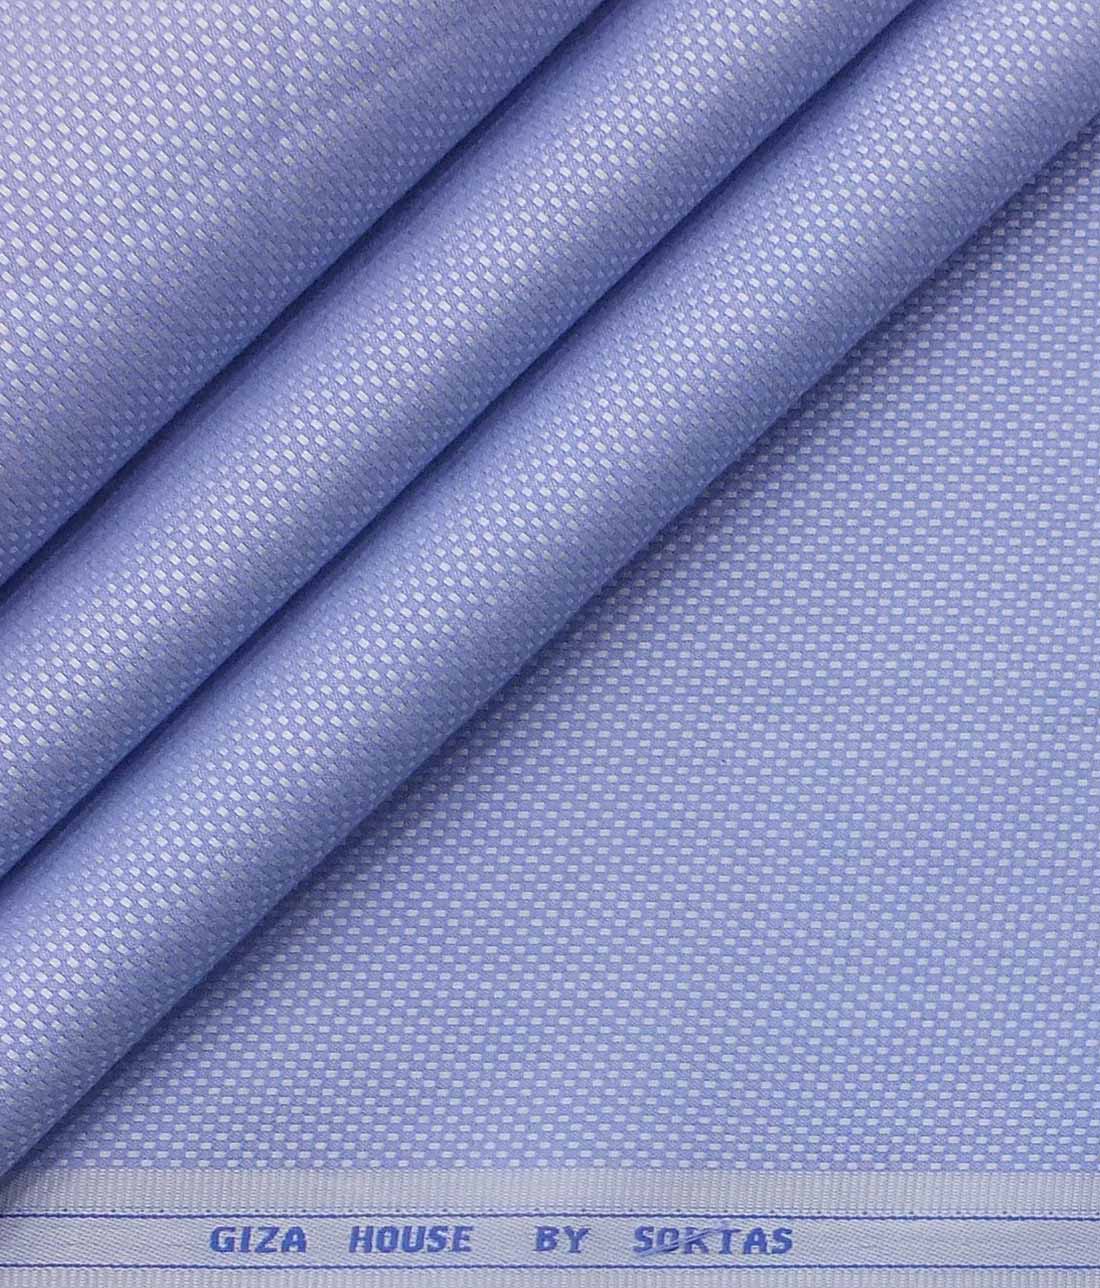 Soktas Men's Sky Blue Giza Cotton Royal Oxford Weave Structured Shirt Fabric